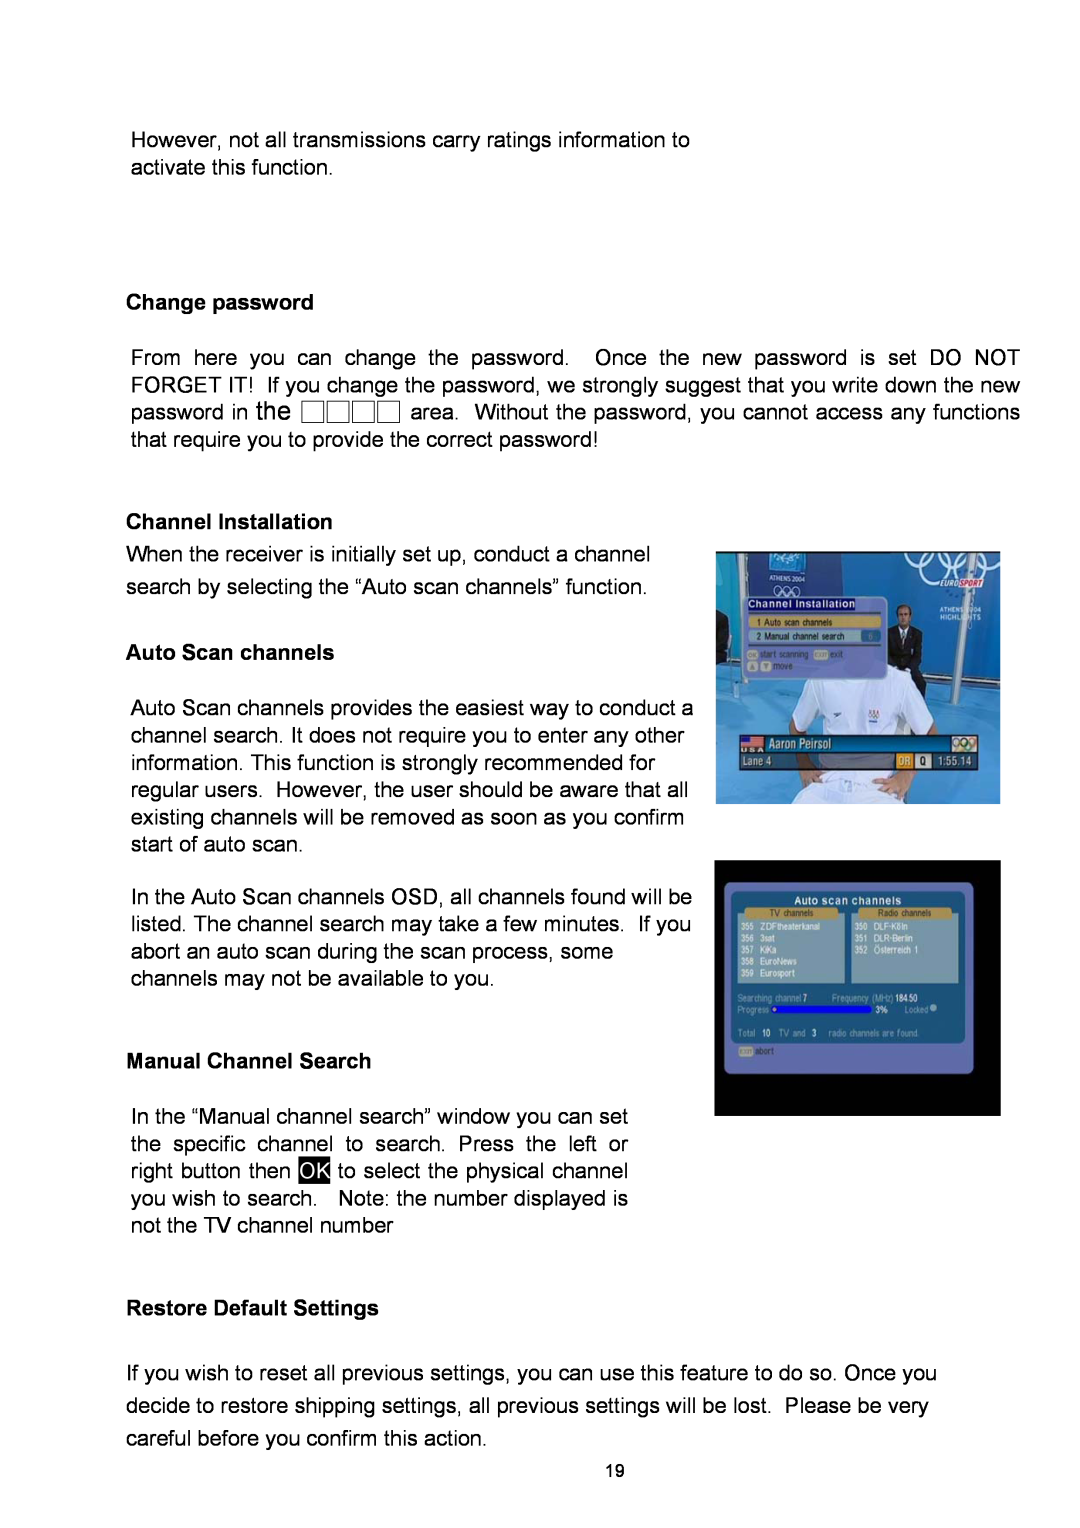 Technicolor - Thomson TU-SZT105A Change password, Channel Installation, Auto Scan channels, Manual Channel Search 